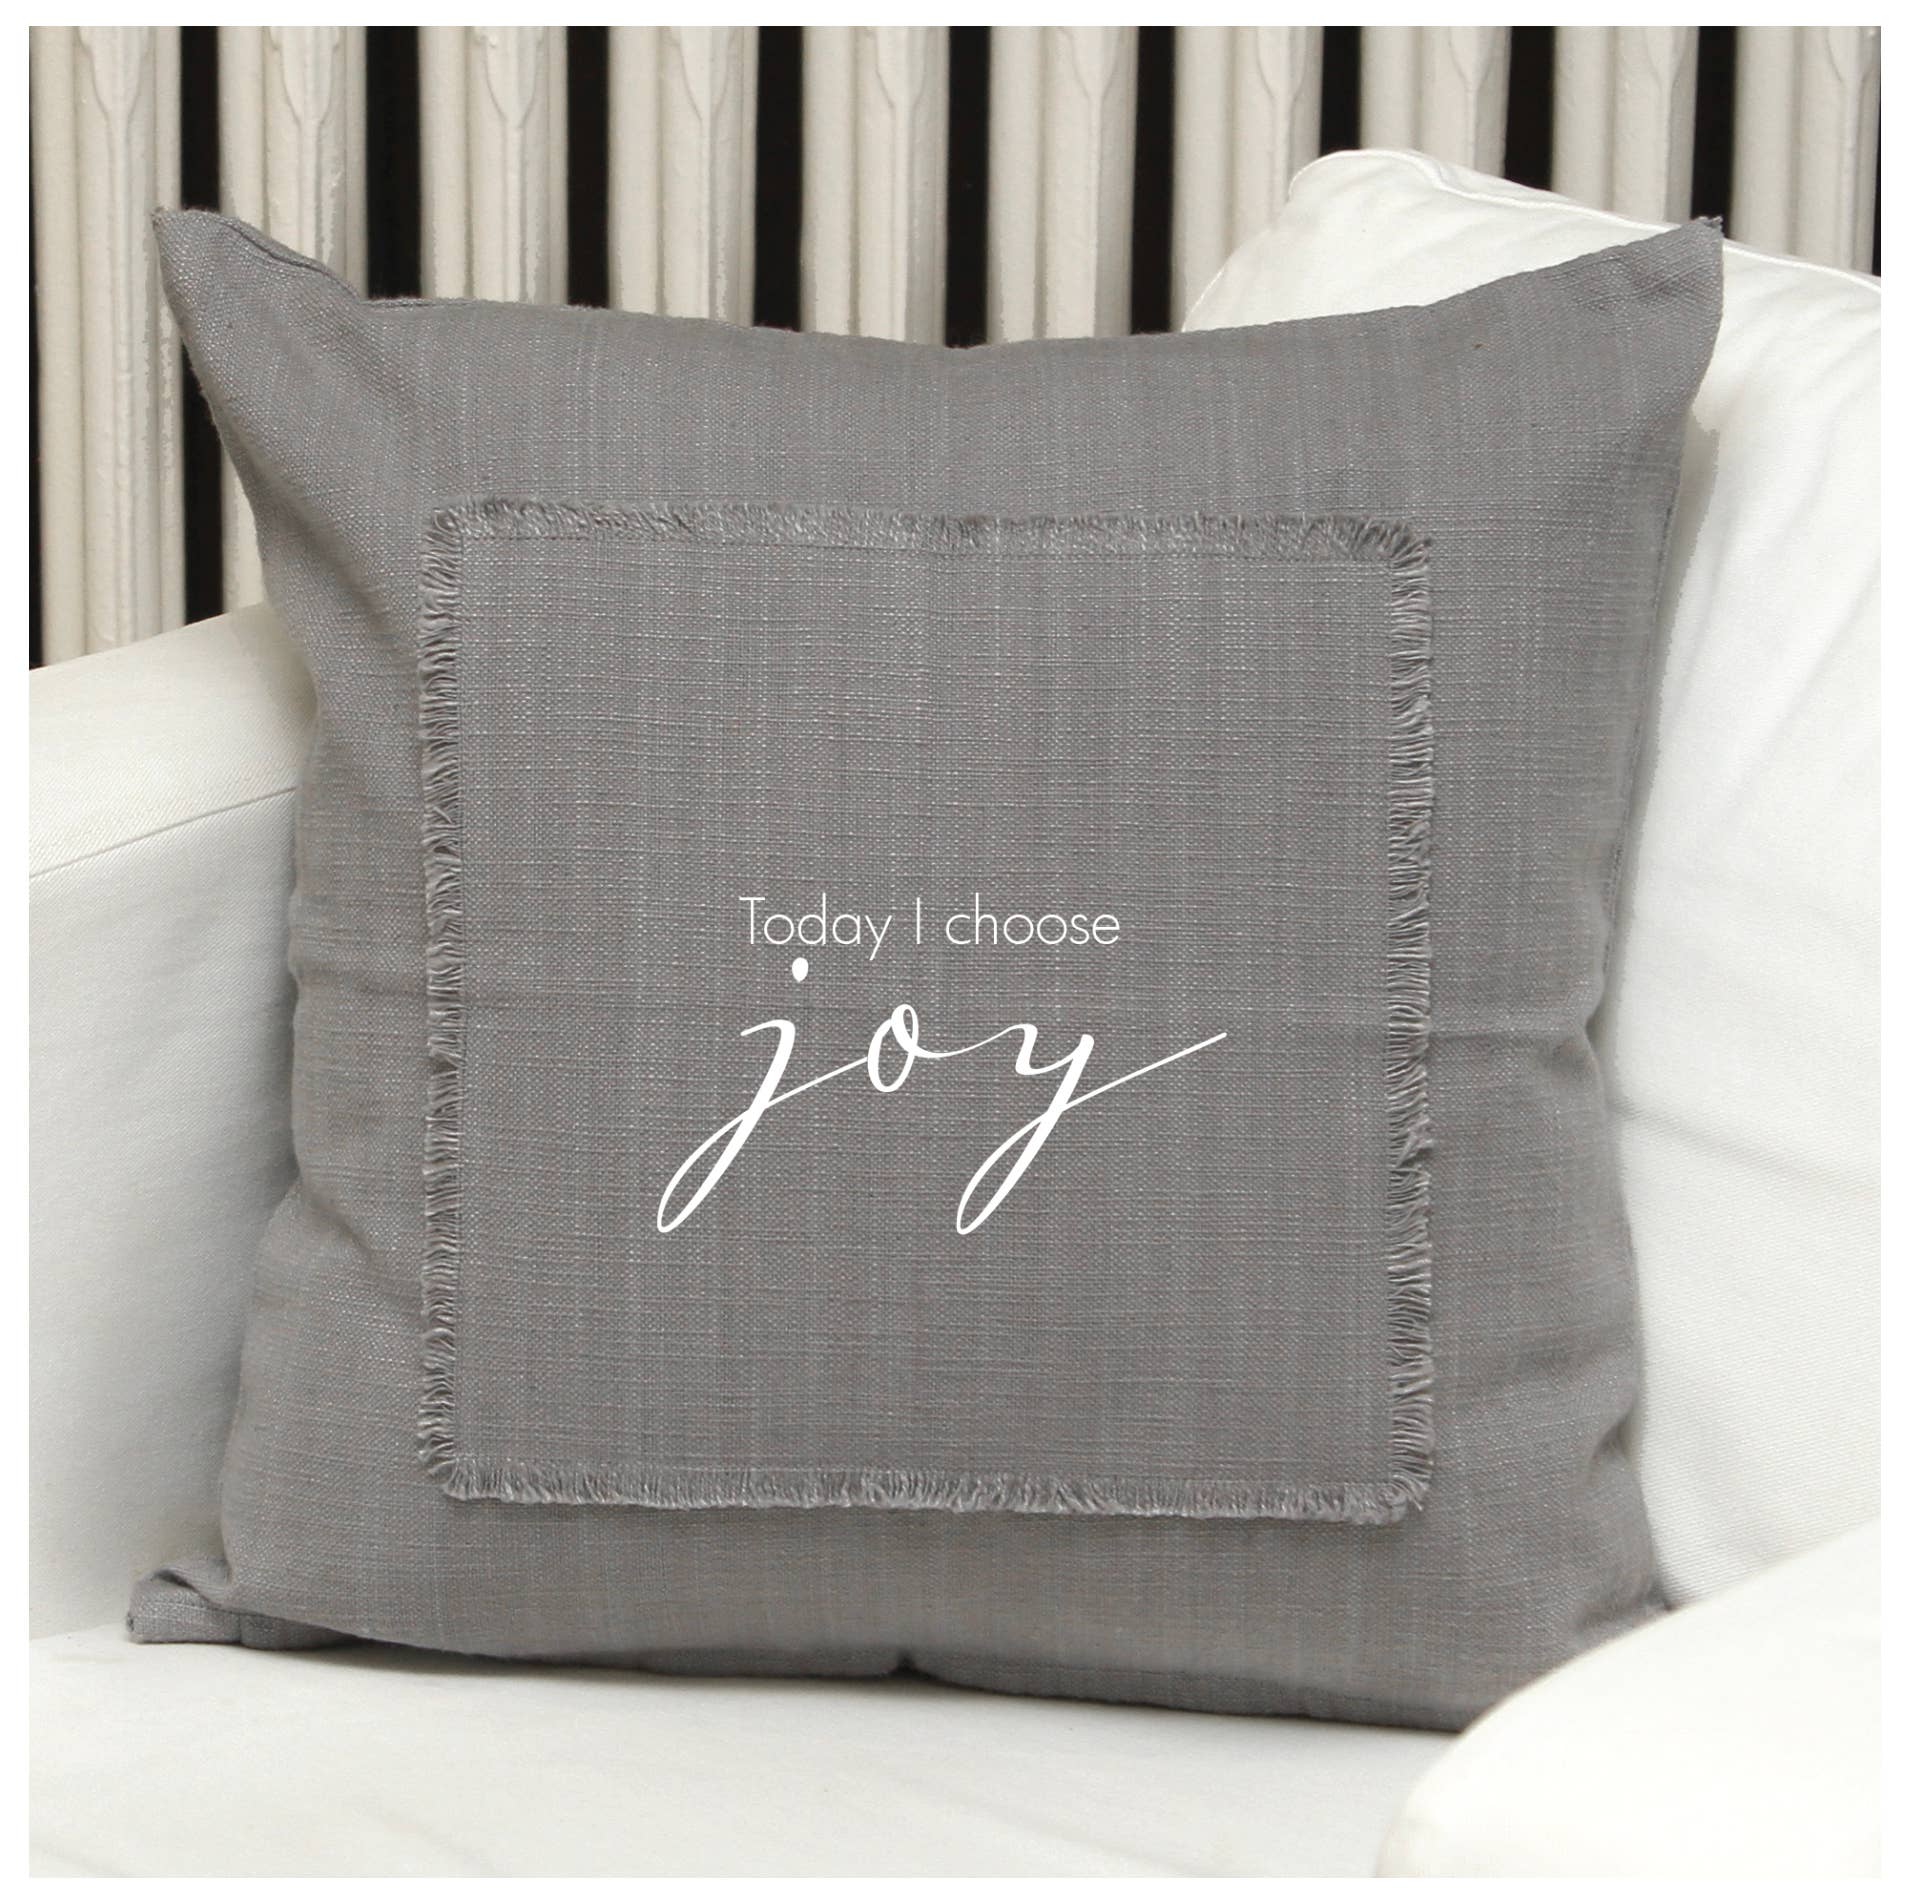 Today I choose joy Pillow Cover